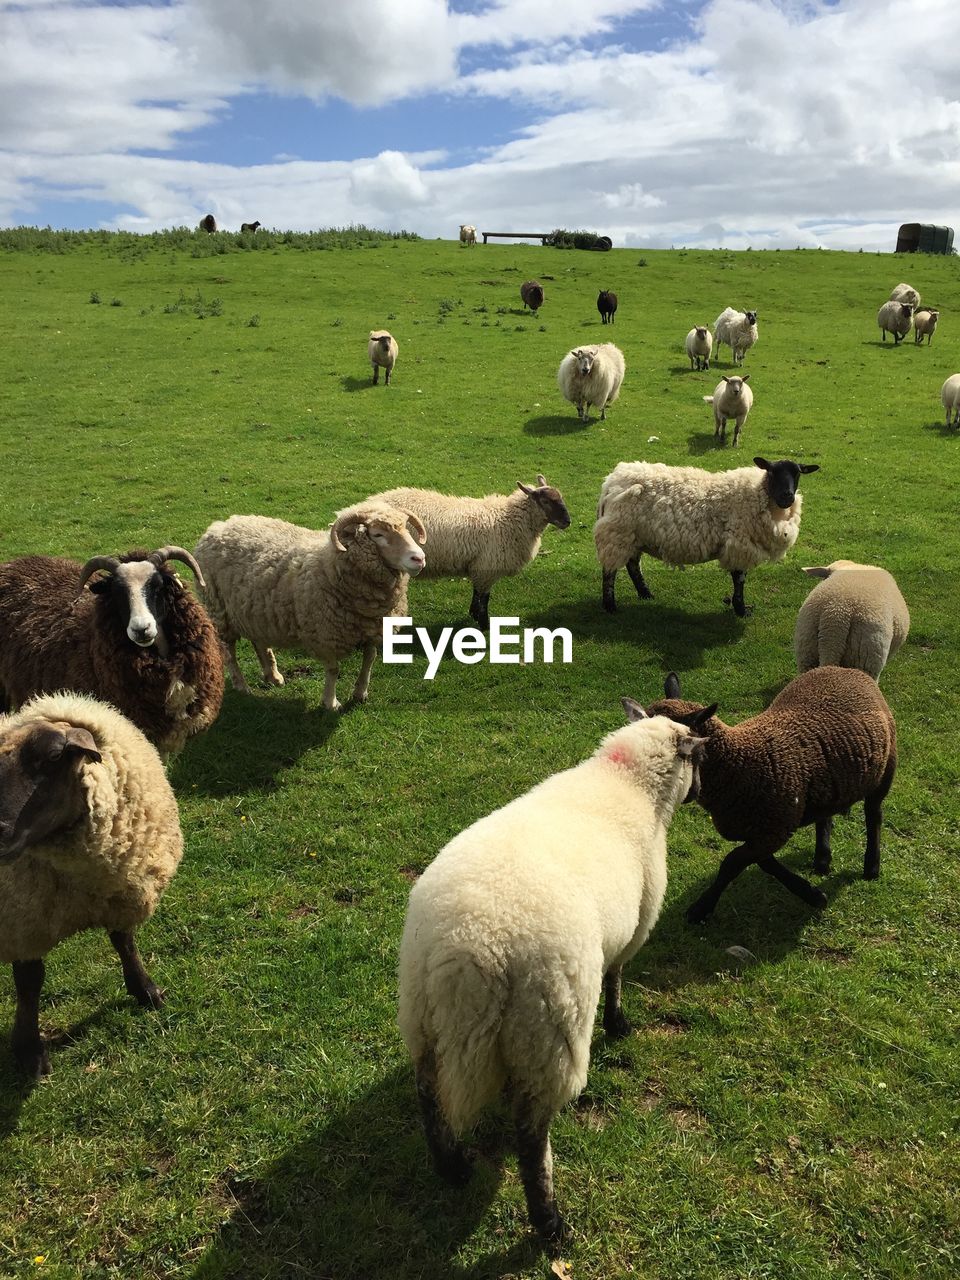 Sheep on green field